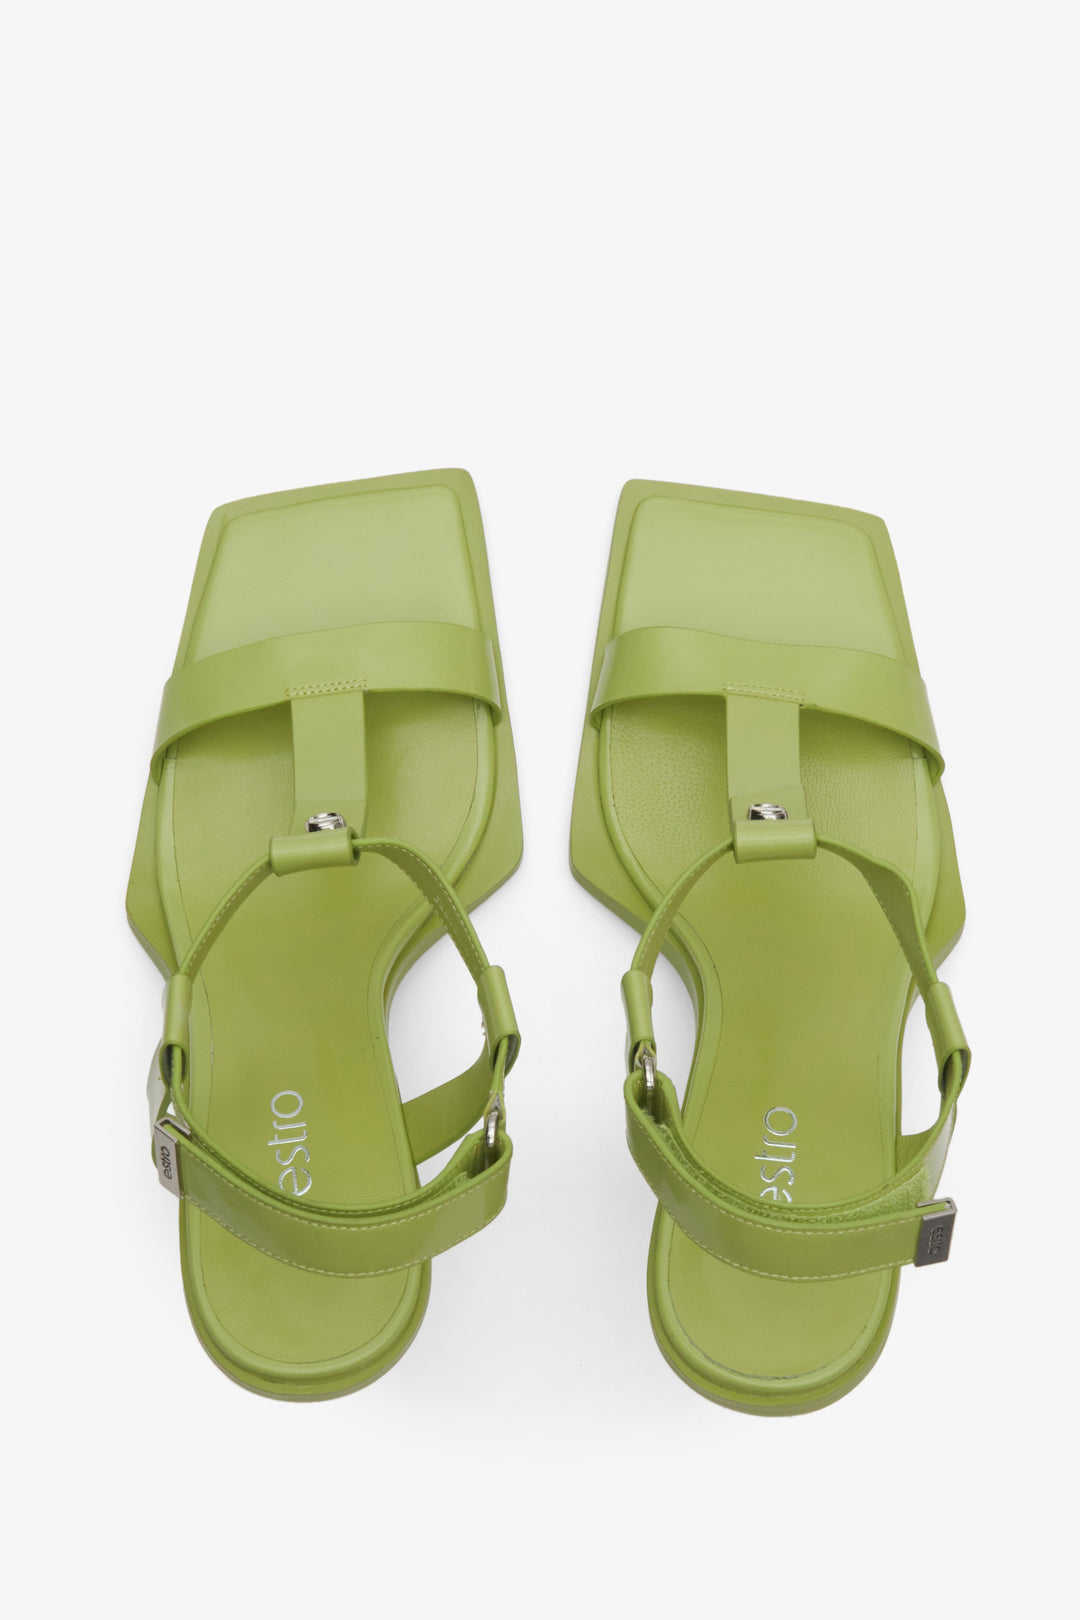 Stylish light green t-bar strappy sandals, Estro brand - presentation from above.